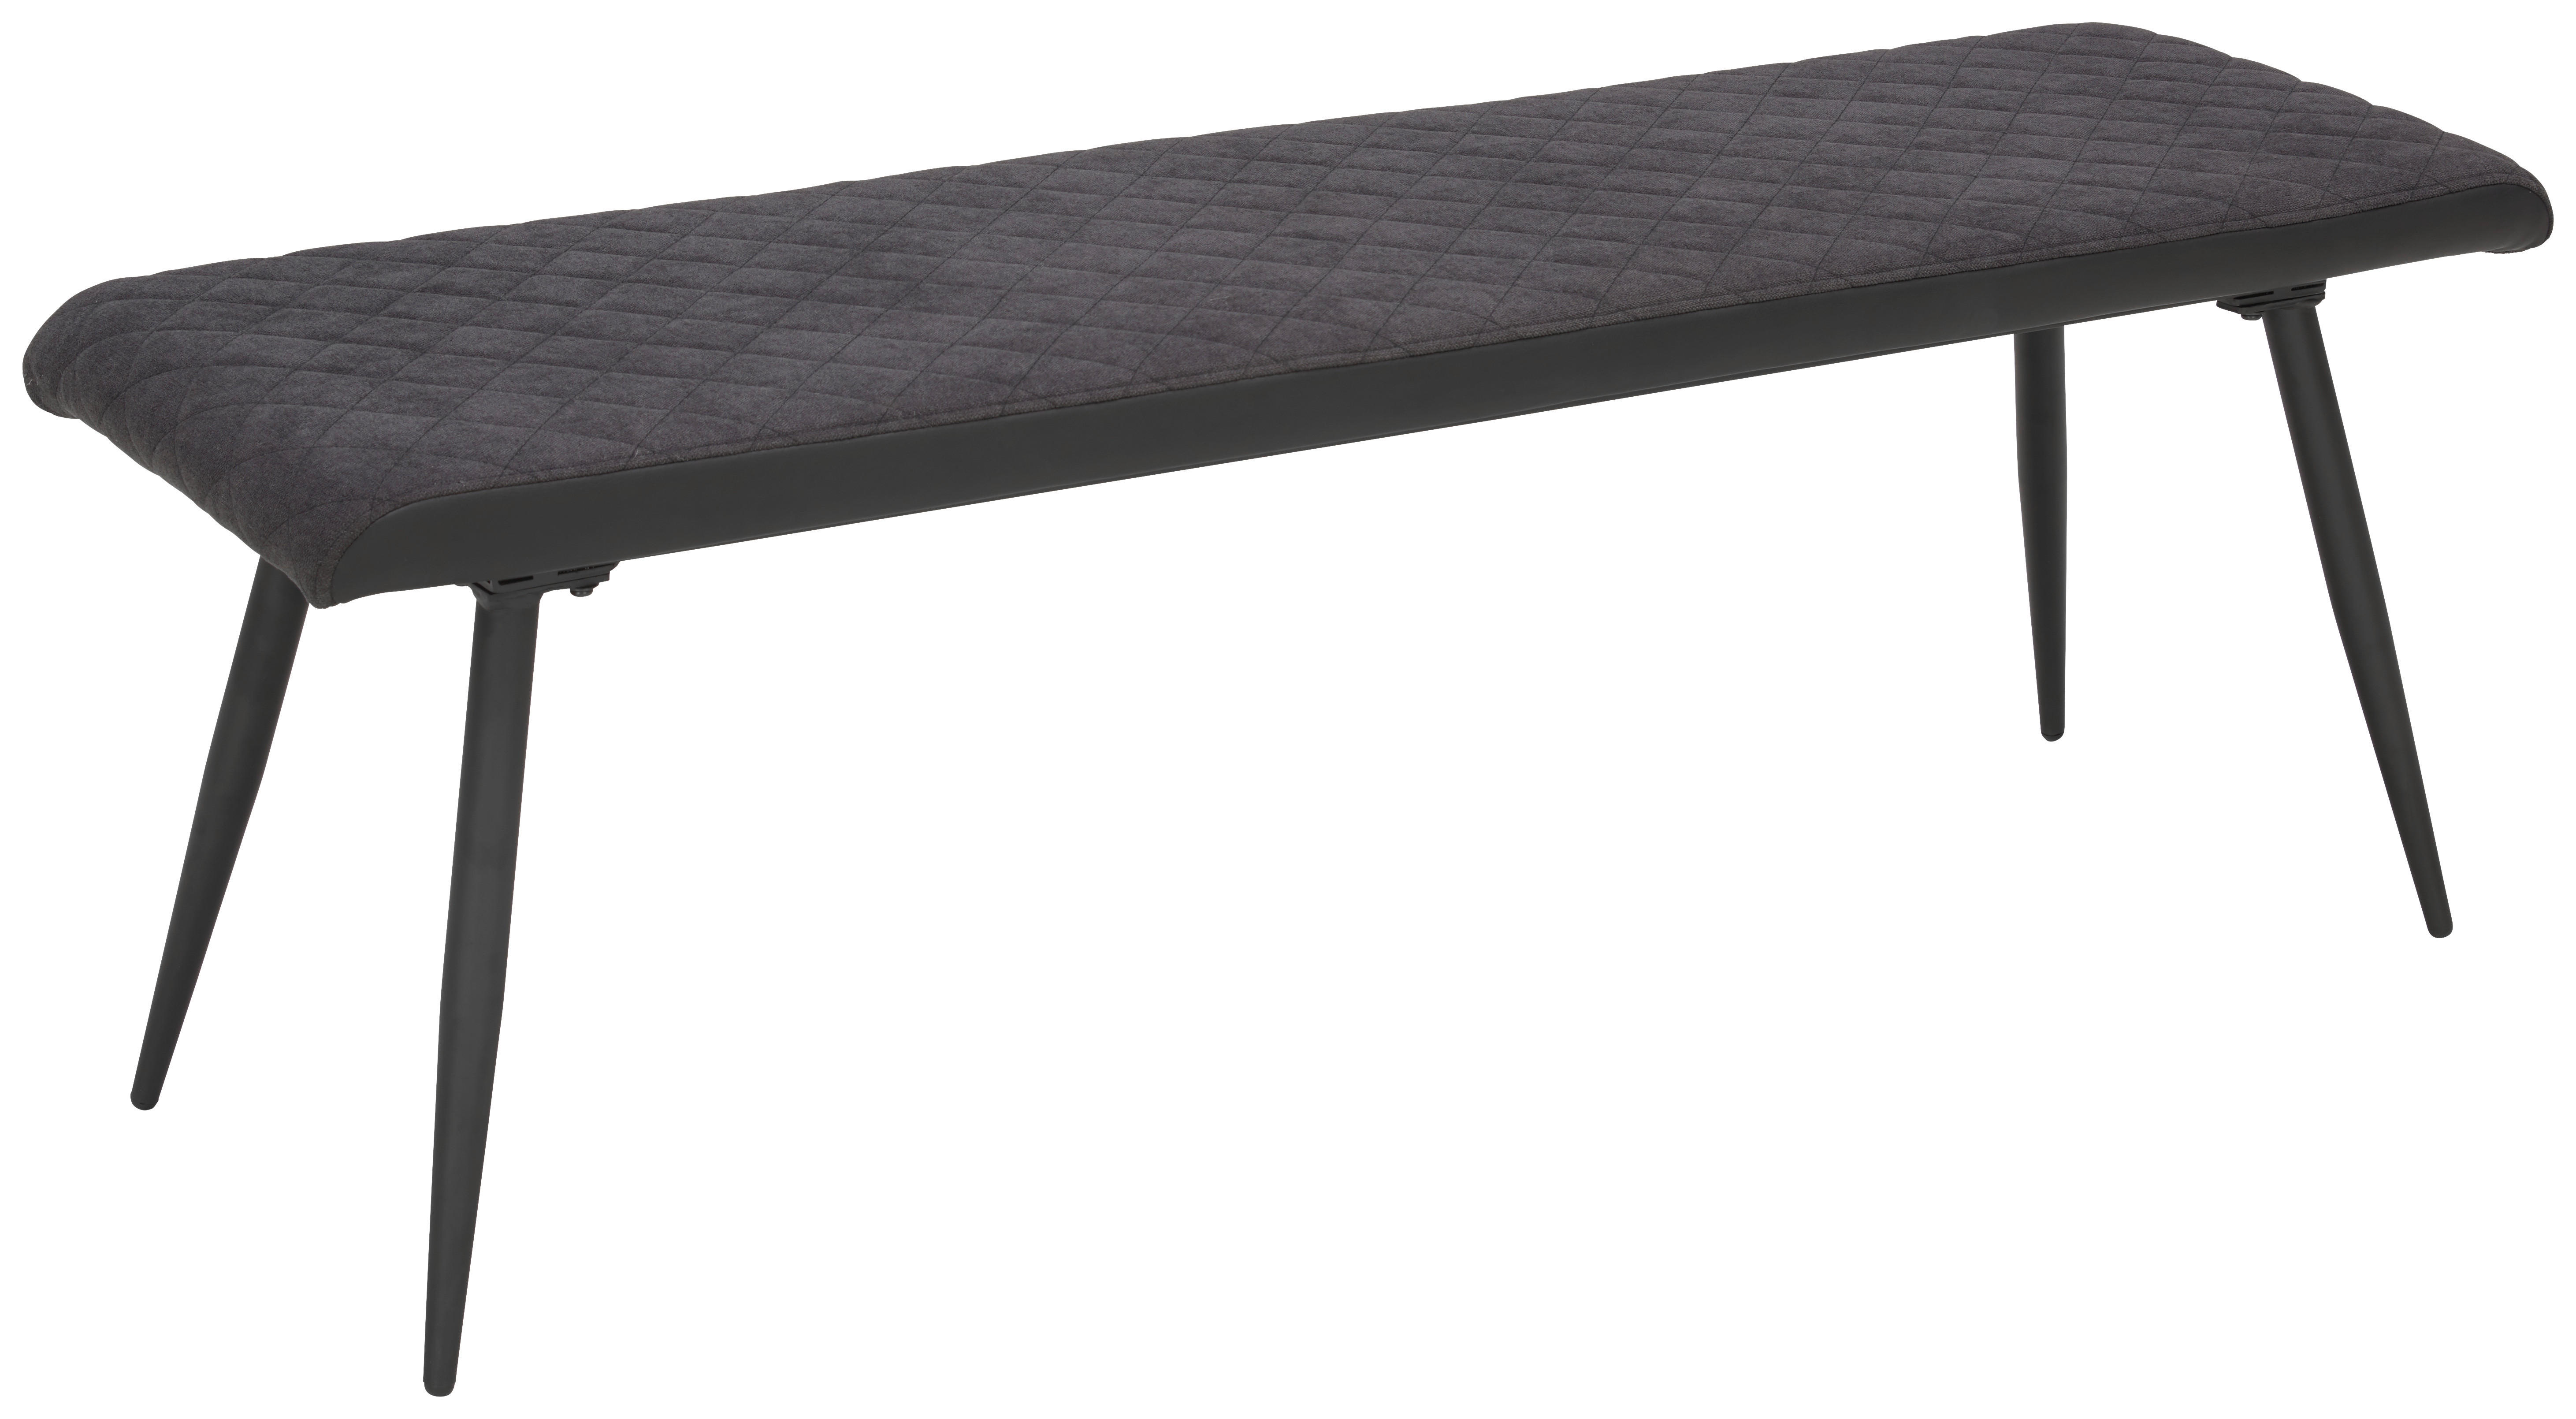 SITTBÄNK i metall, textil antracit, svart  - svart/antracit, Design, metall/textil (140/48/42cm) - Carryhome